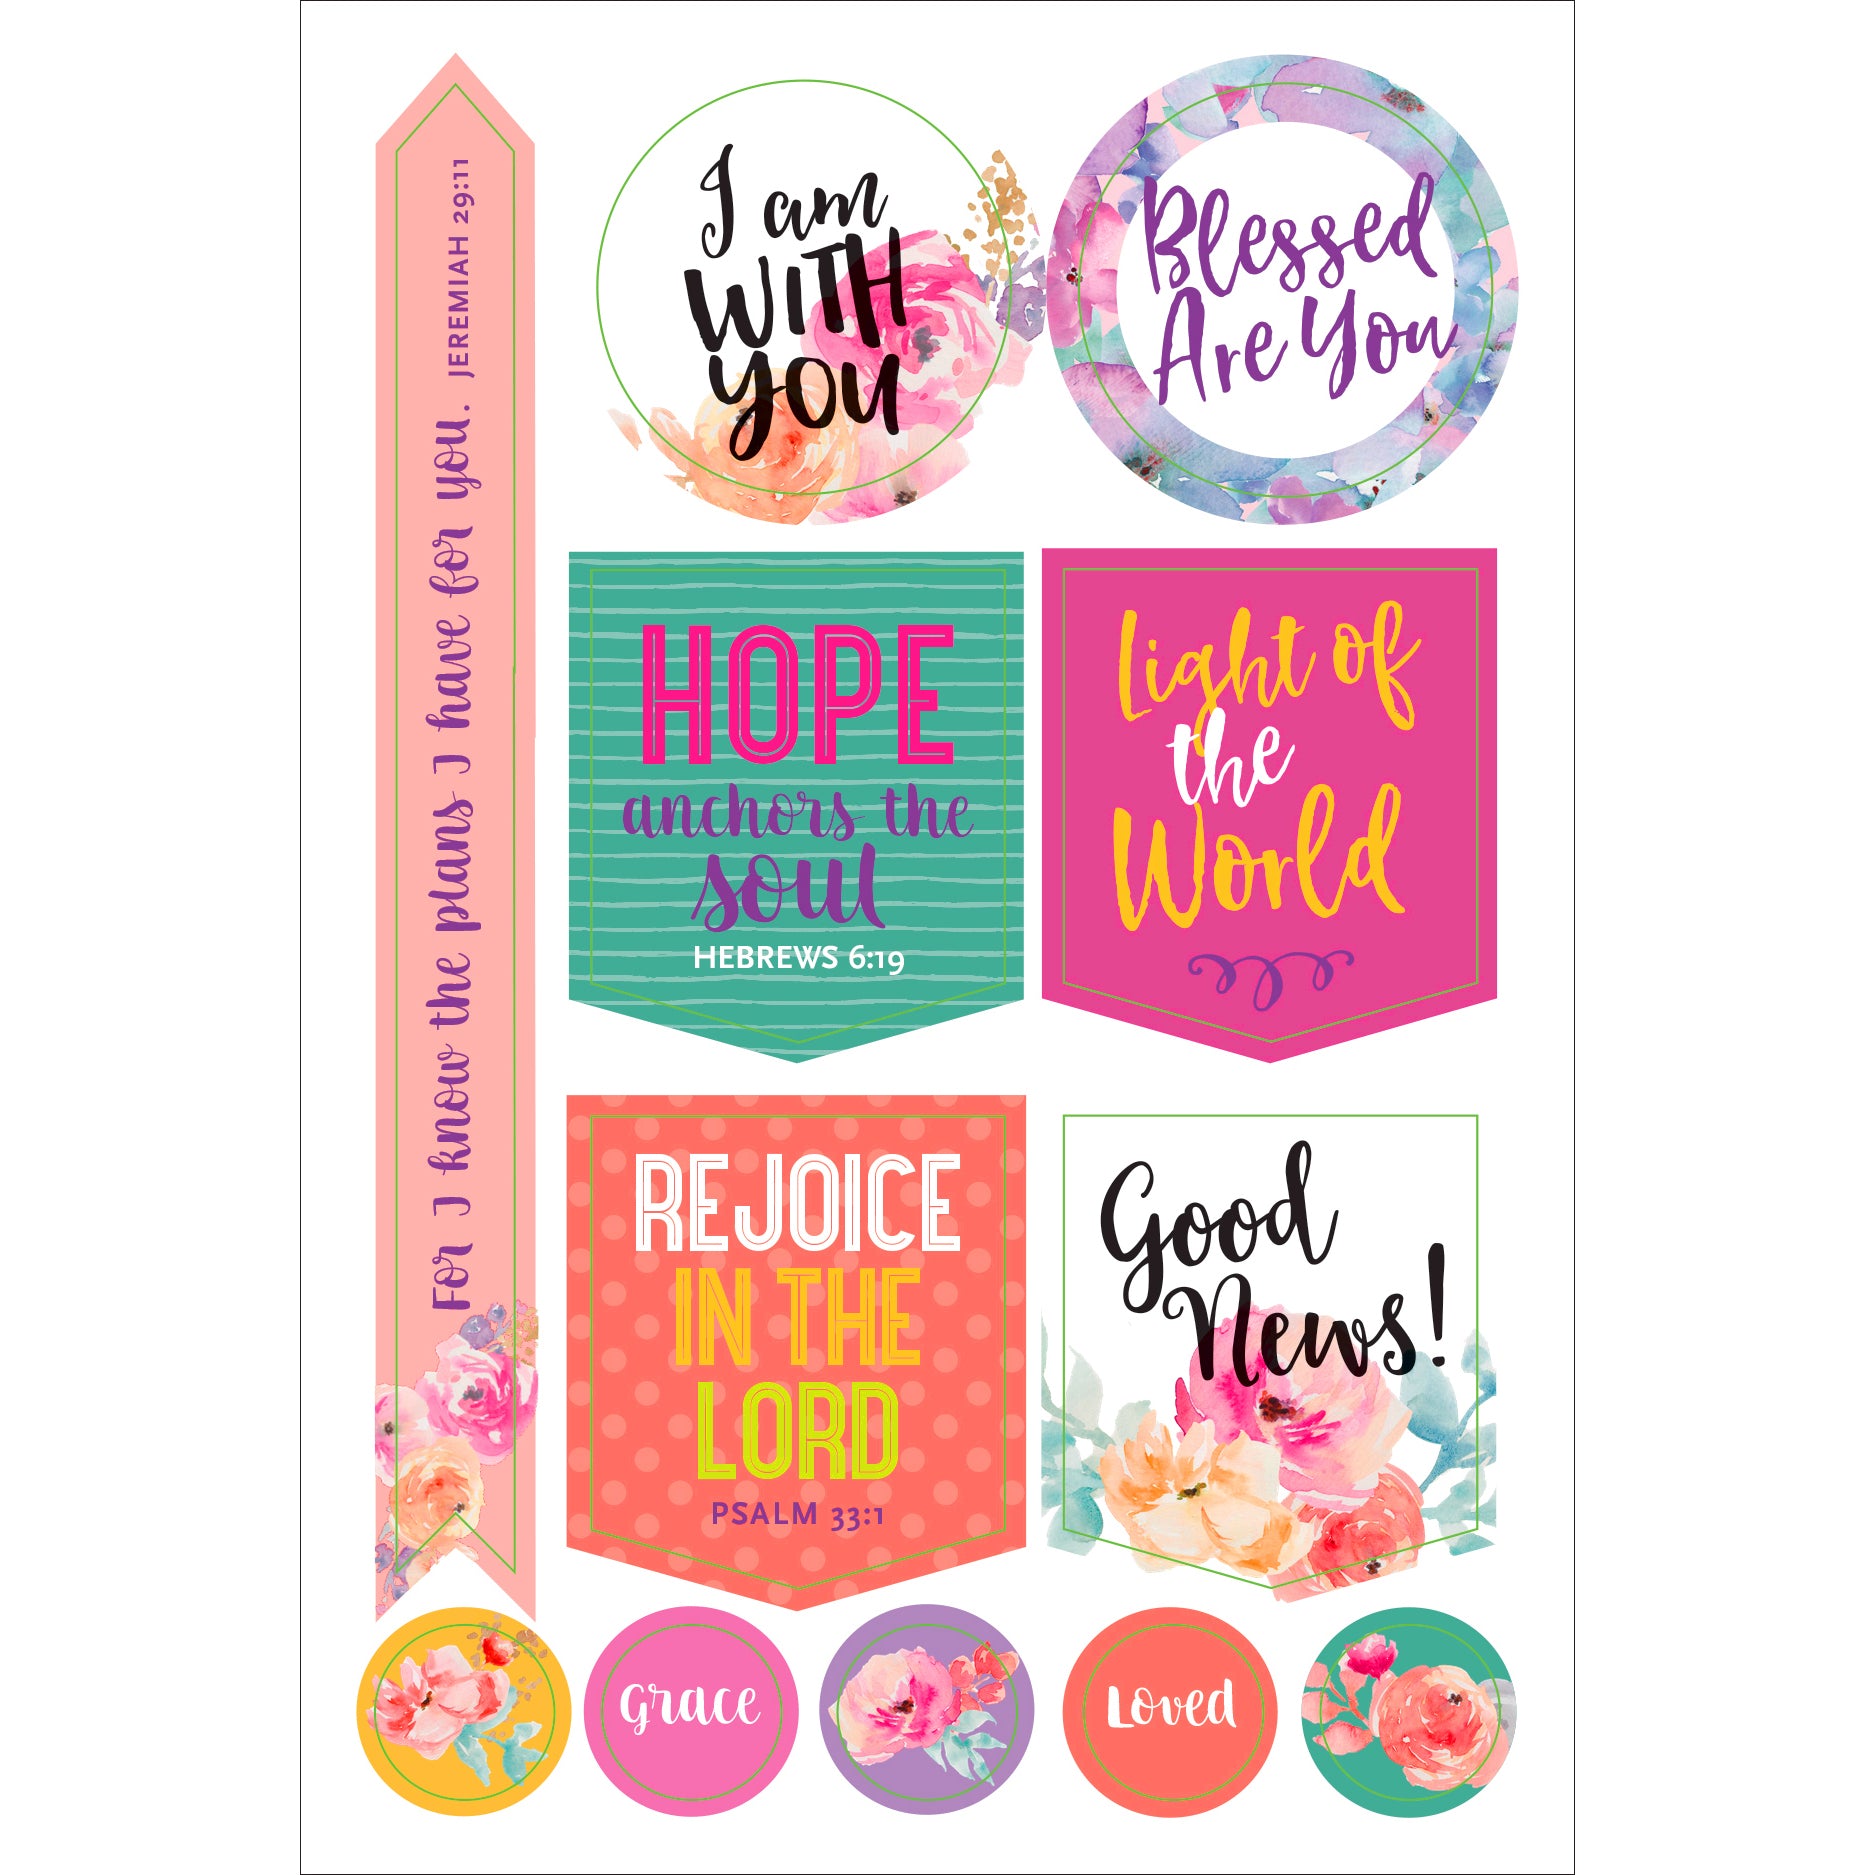 Faith Planner Stickers - 12 sheets - Paper Kooka